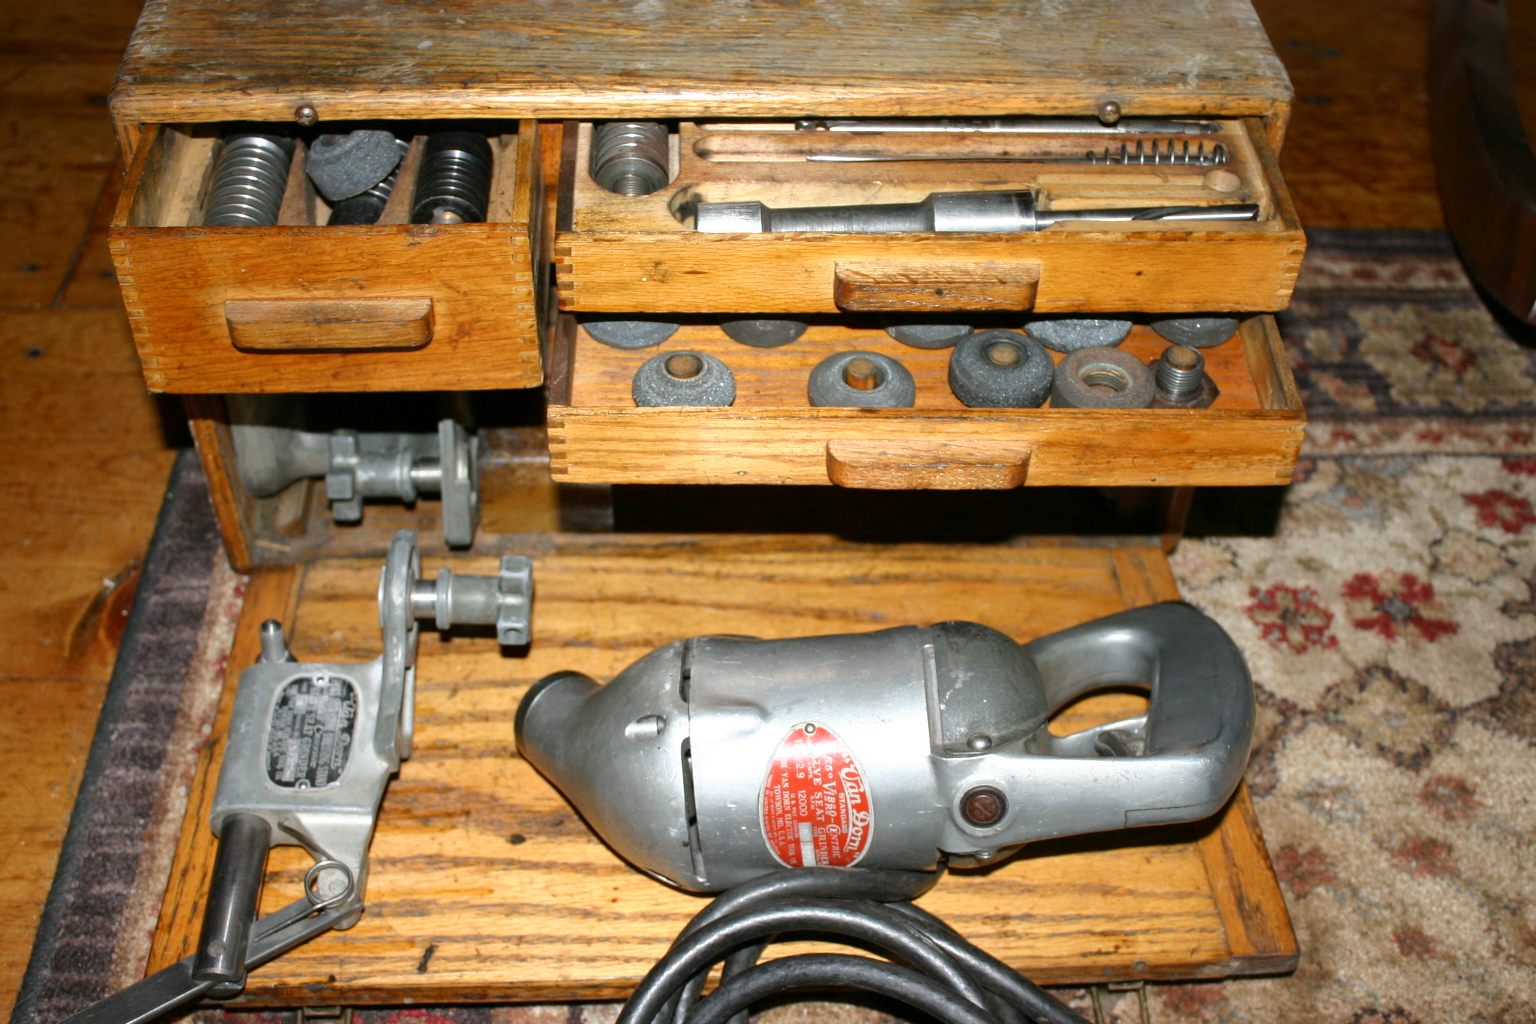 Black and Decker/SIOUX, COMPLETE valve grinder tool set. Mine